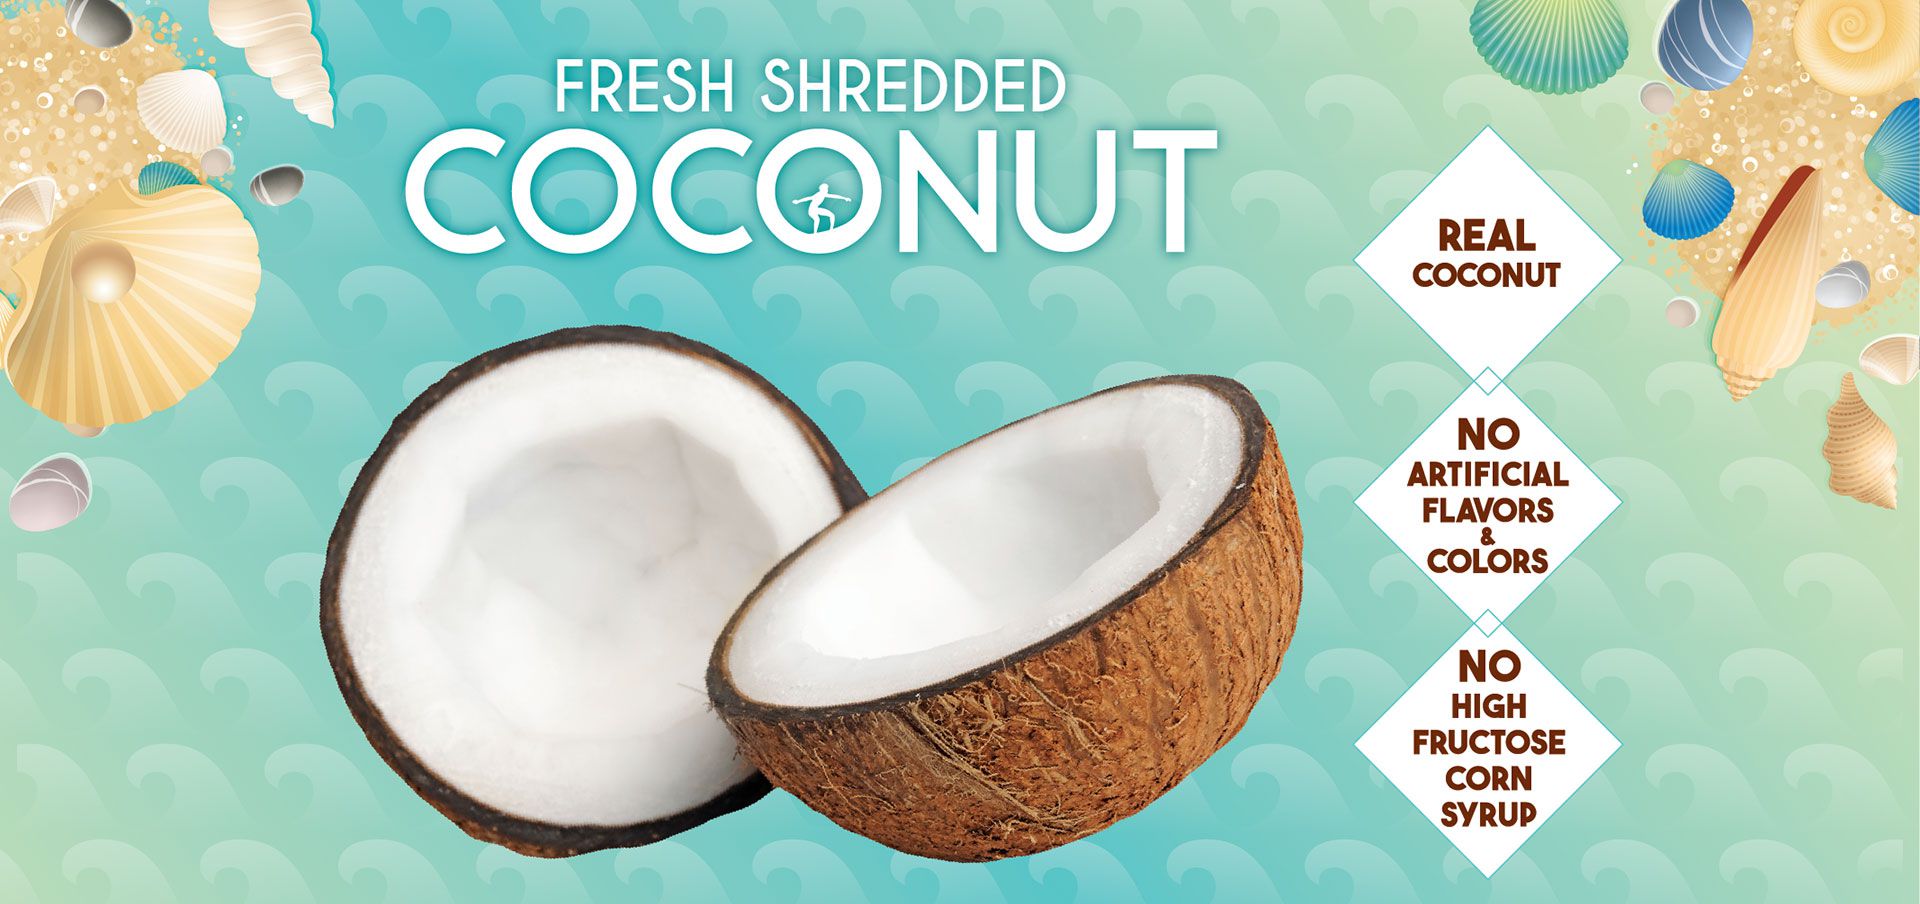 fresh shredded coconut label image